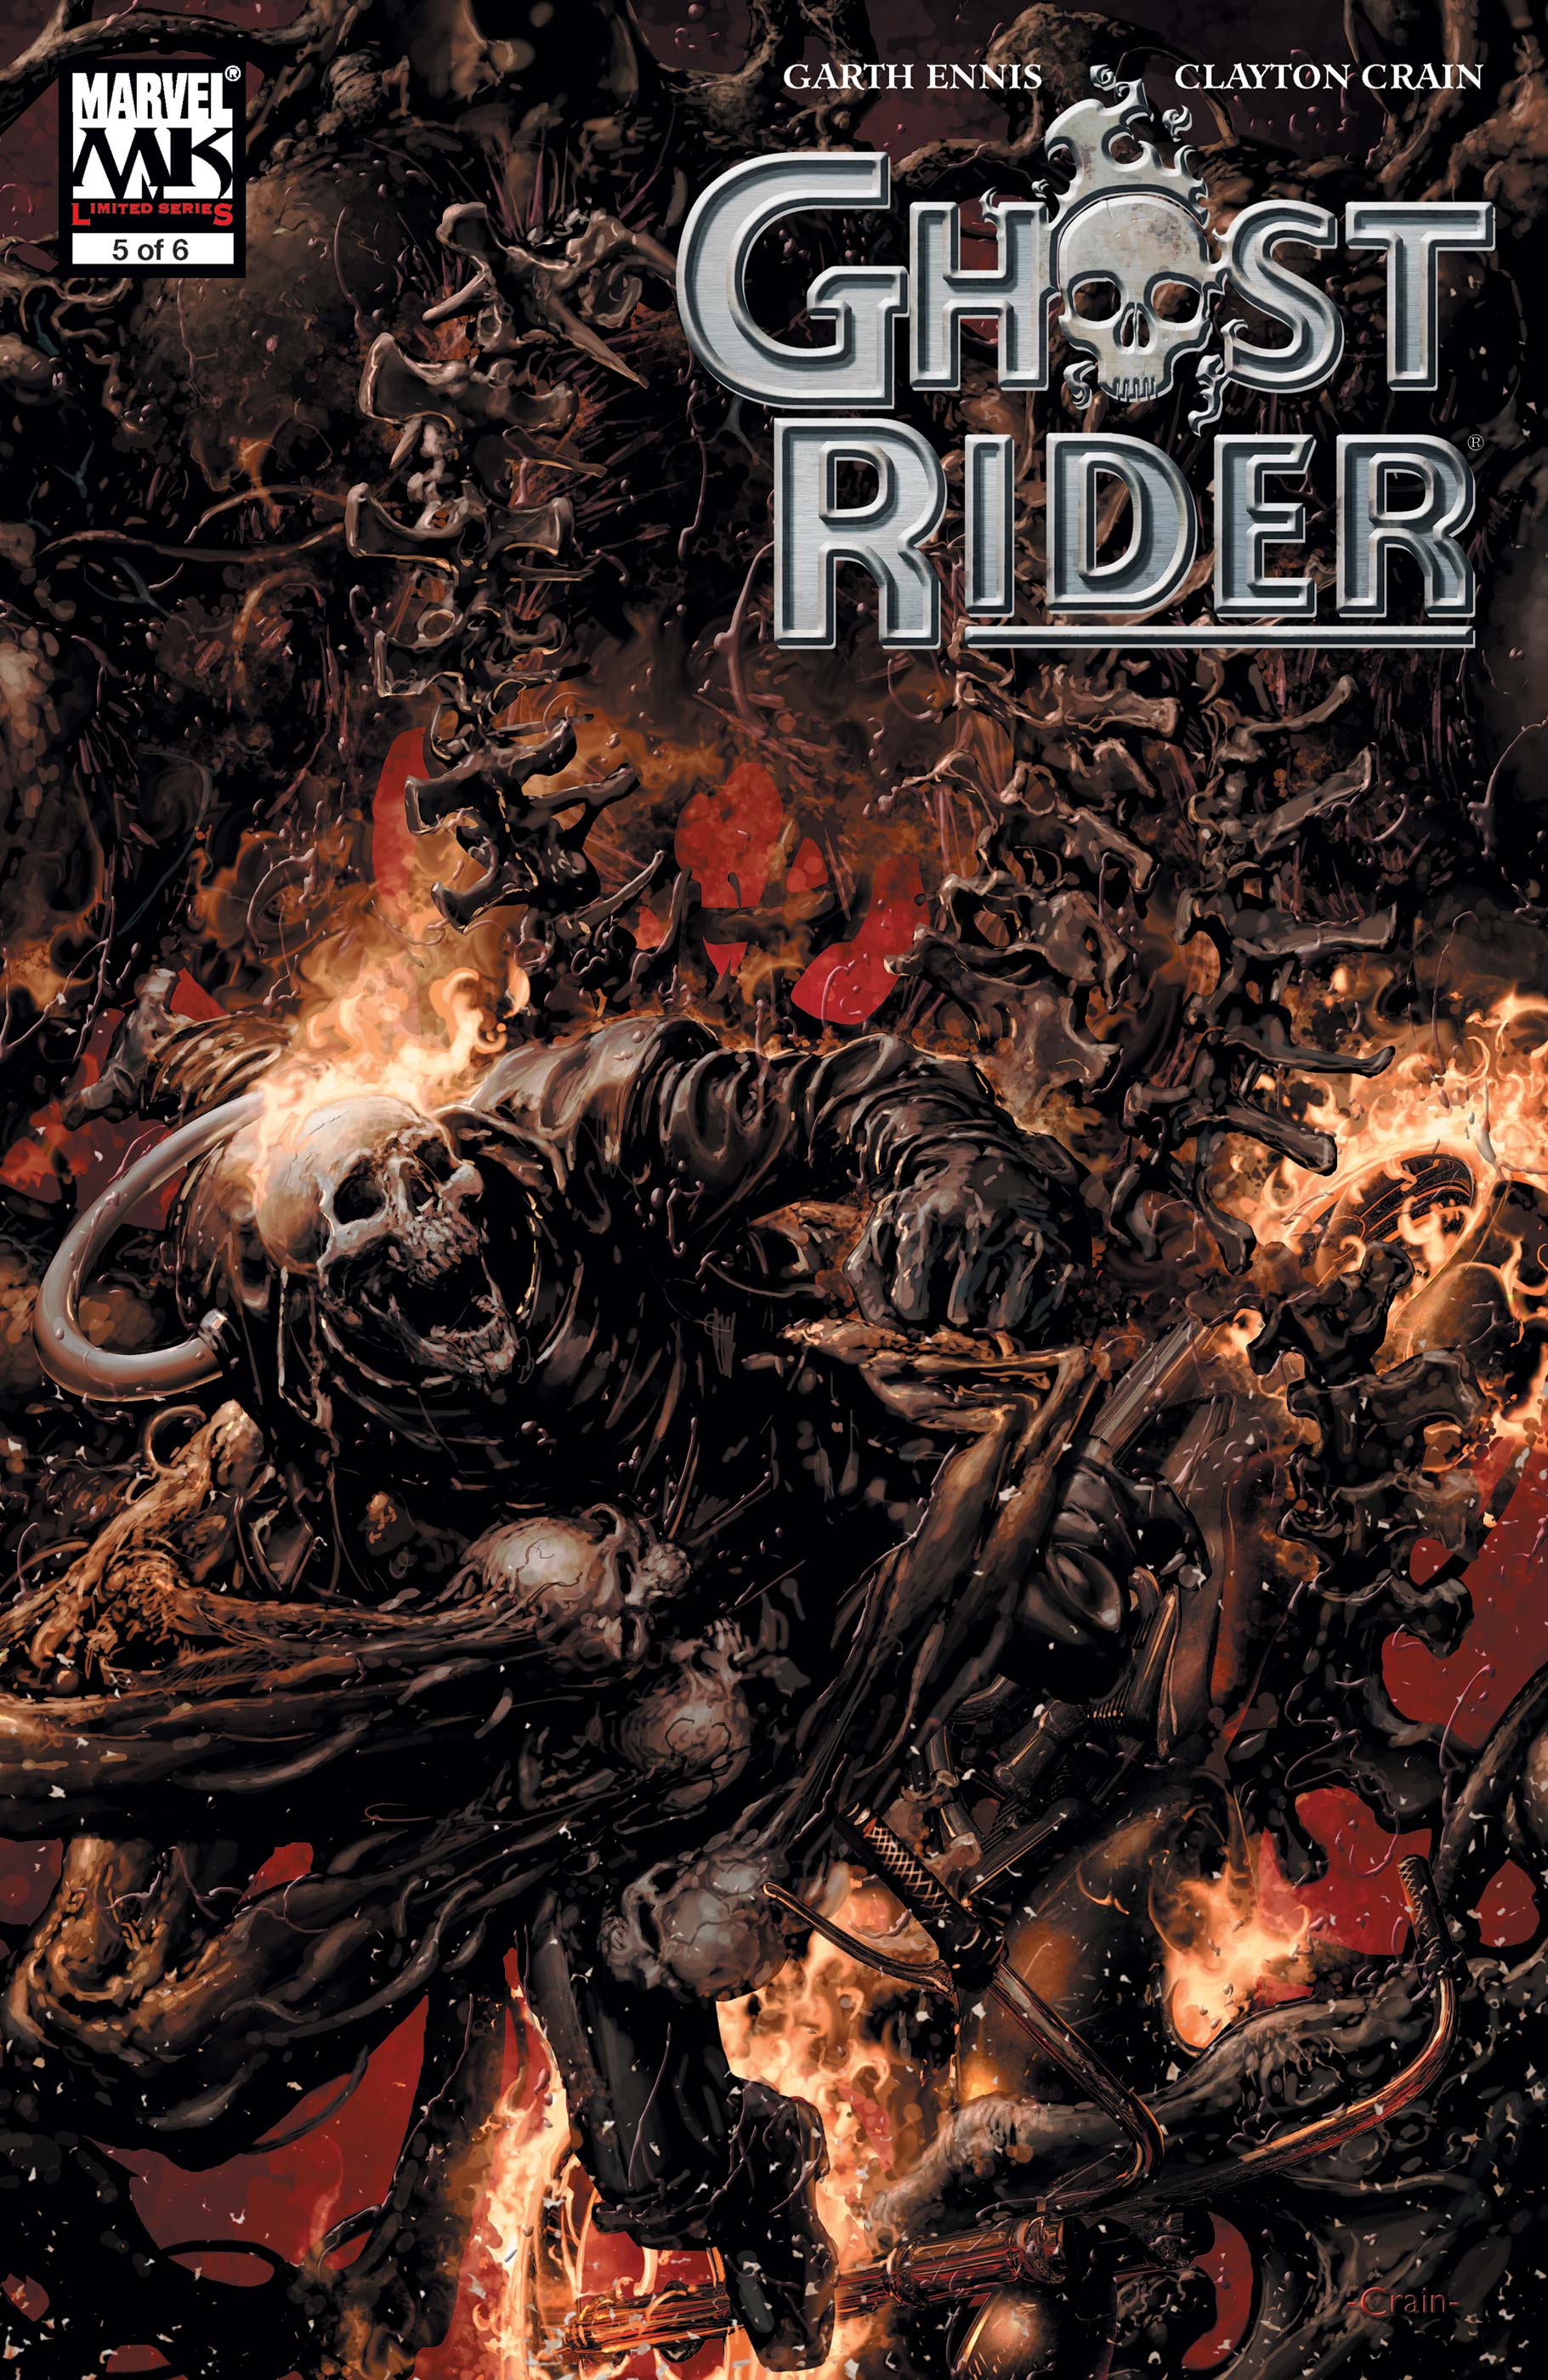 Ghost Rider (2005) #5